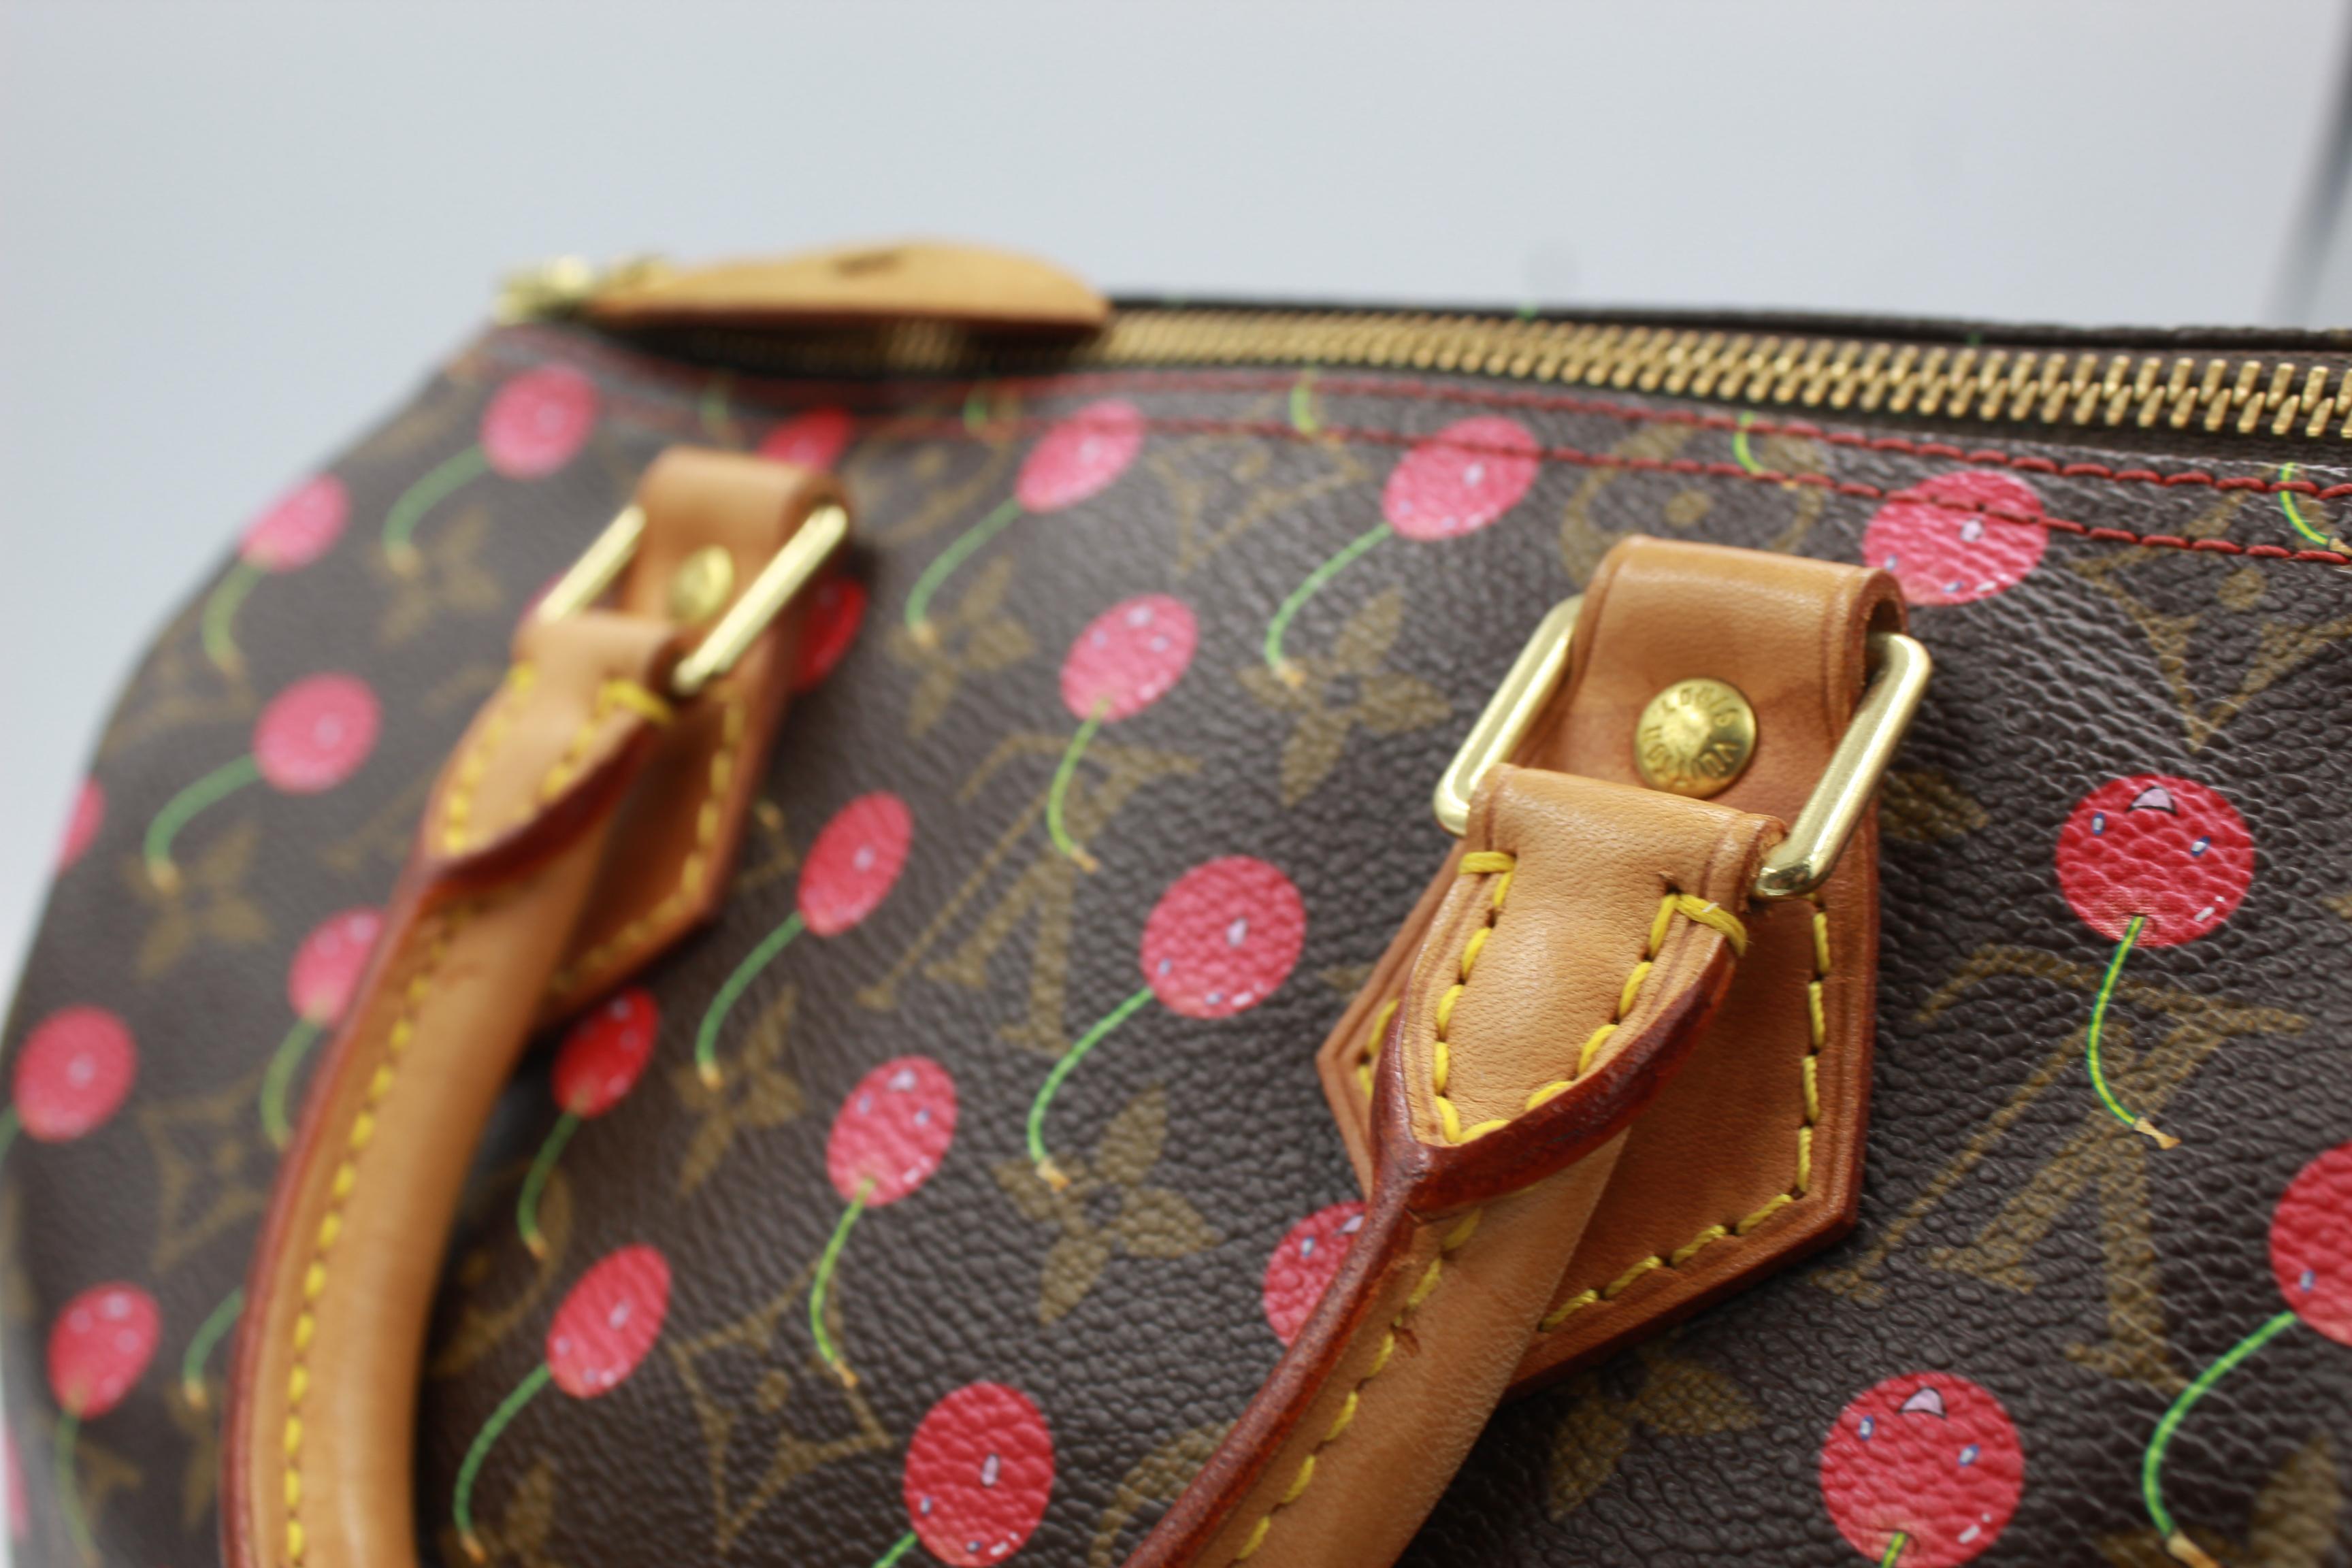 Brown Louis Vuitton Speedy 25 handbag with cherries, by haruki Murakami For Sale